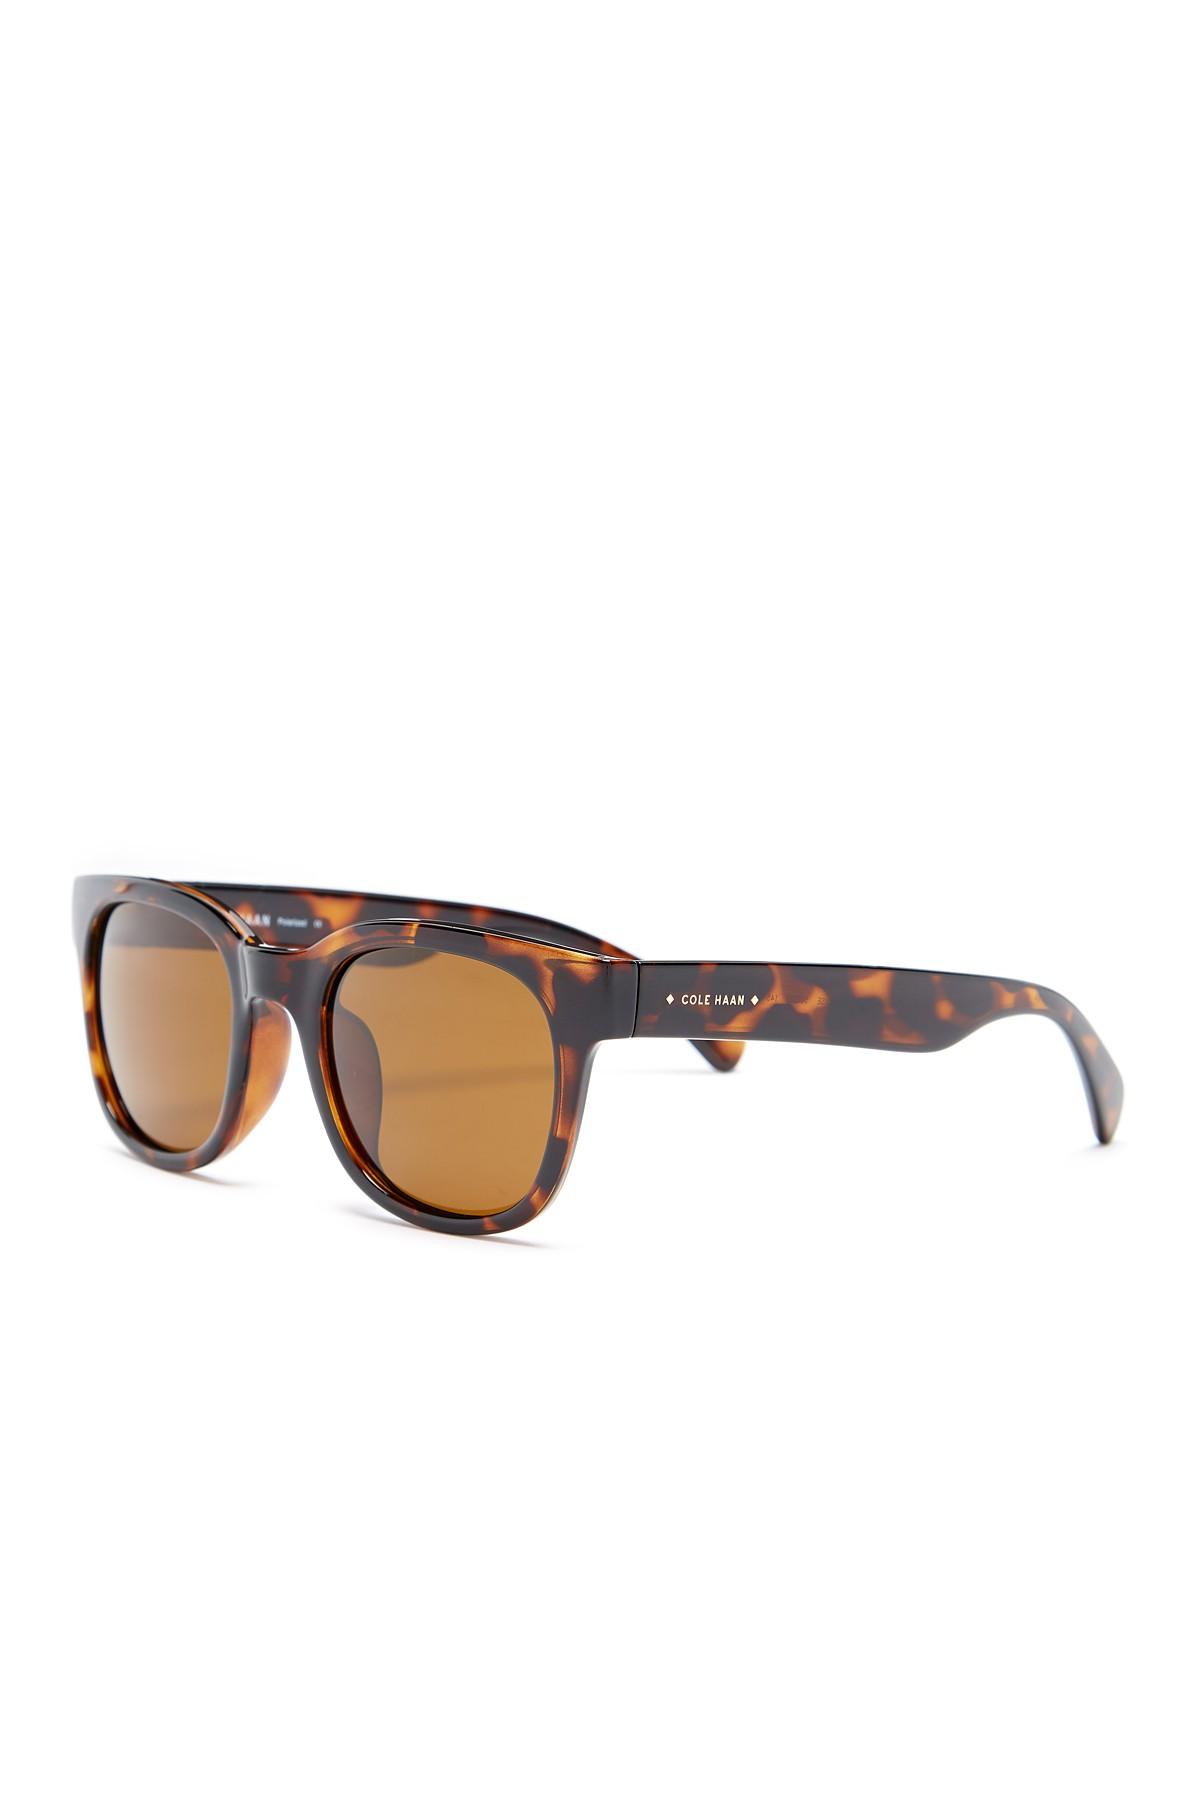 Lyst - Cole Haan Women's Retro Square Polarized Sunglasses in Brown